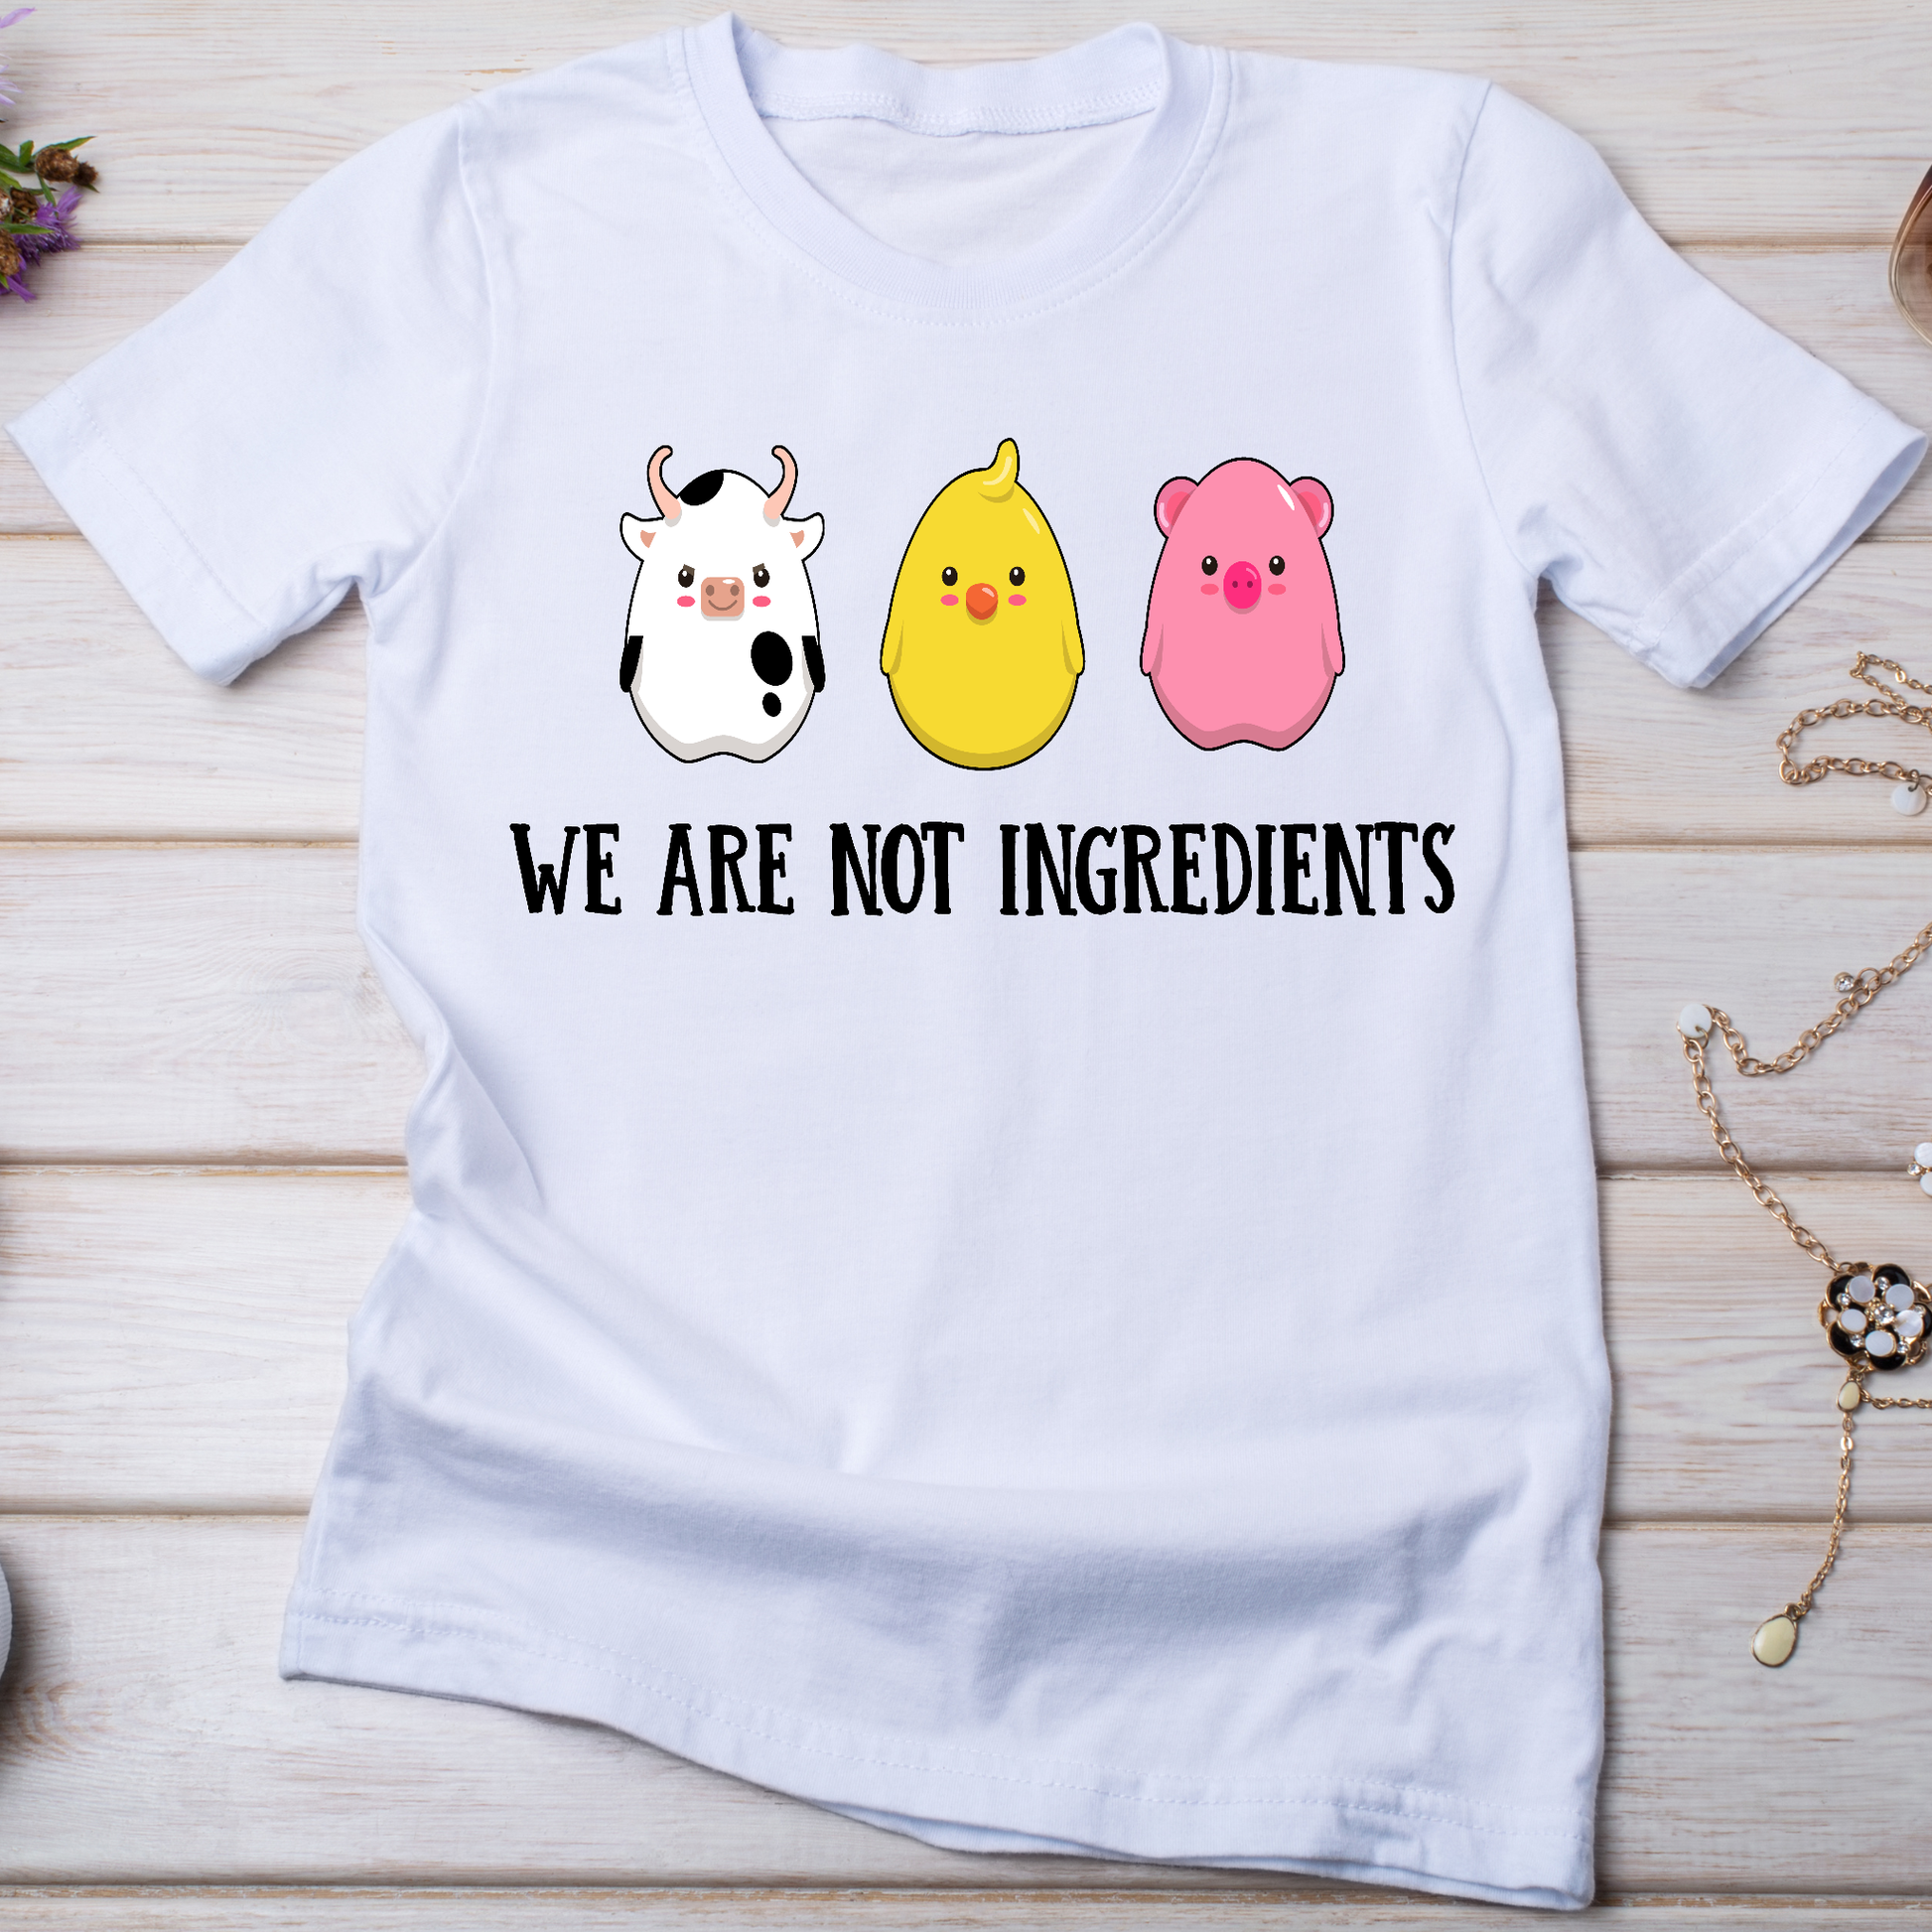 We are not ingredients Women's vegan t-shirt - Premium t-shirt from Lees Krazy Teez - Just $19.95! Shop now at Lees Krazy Teez